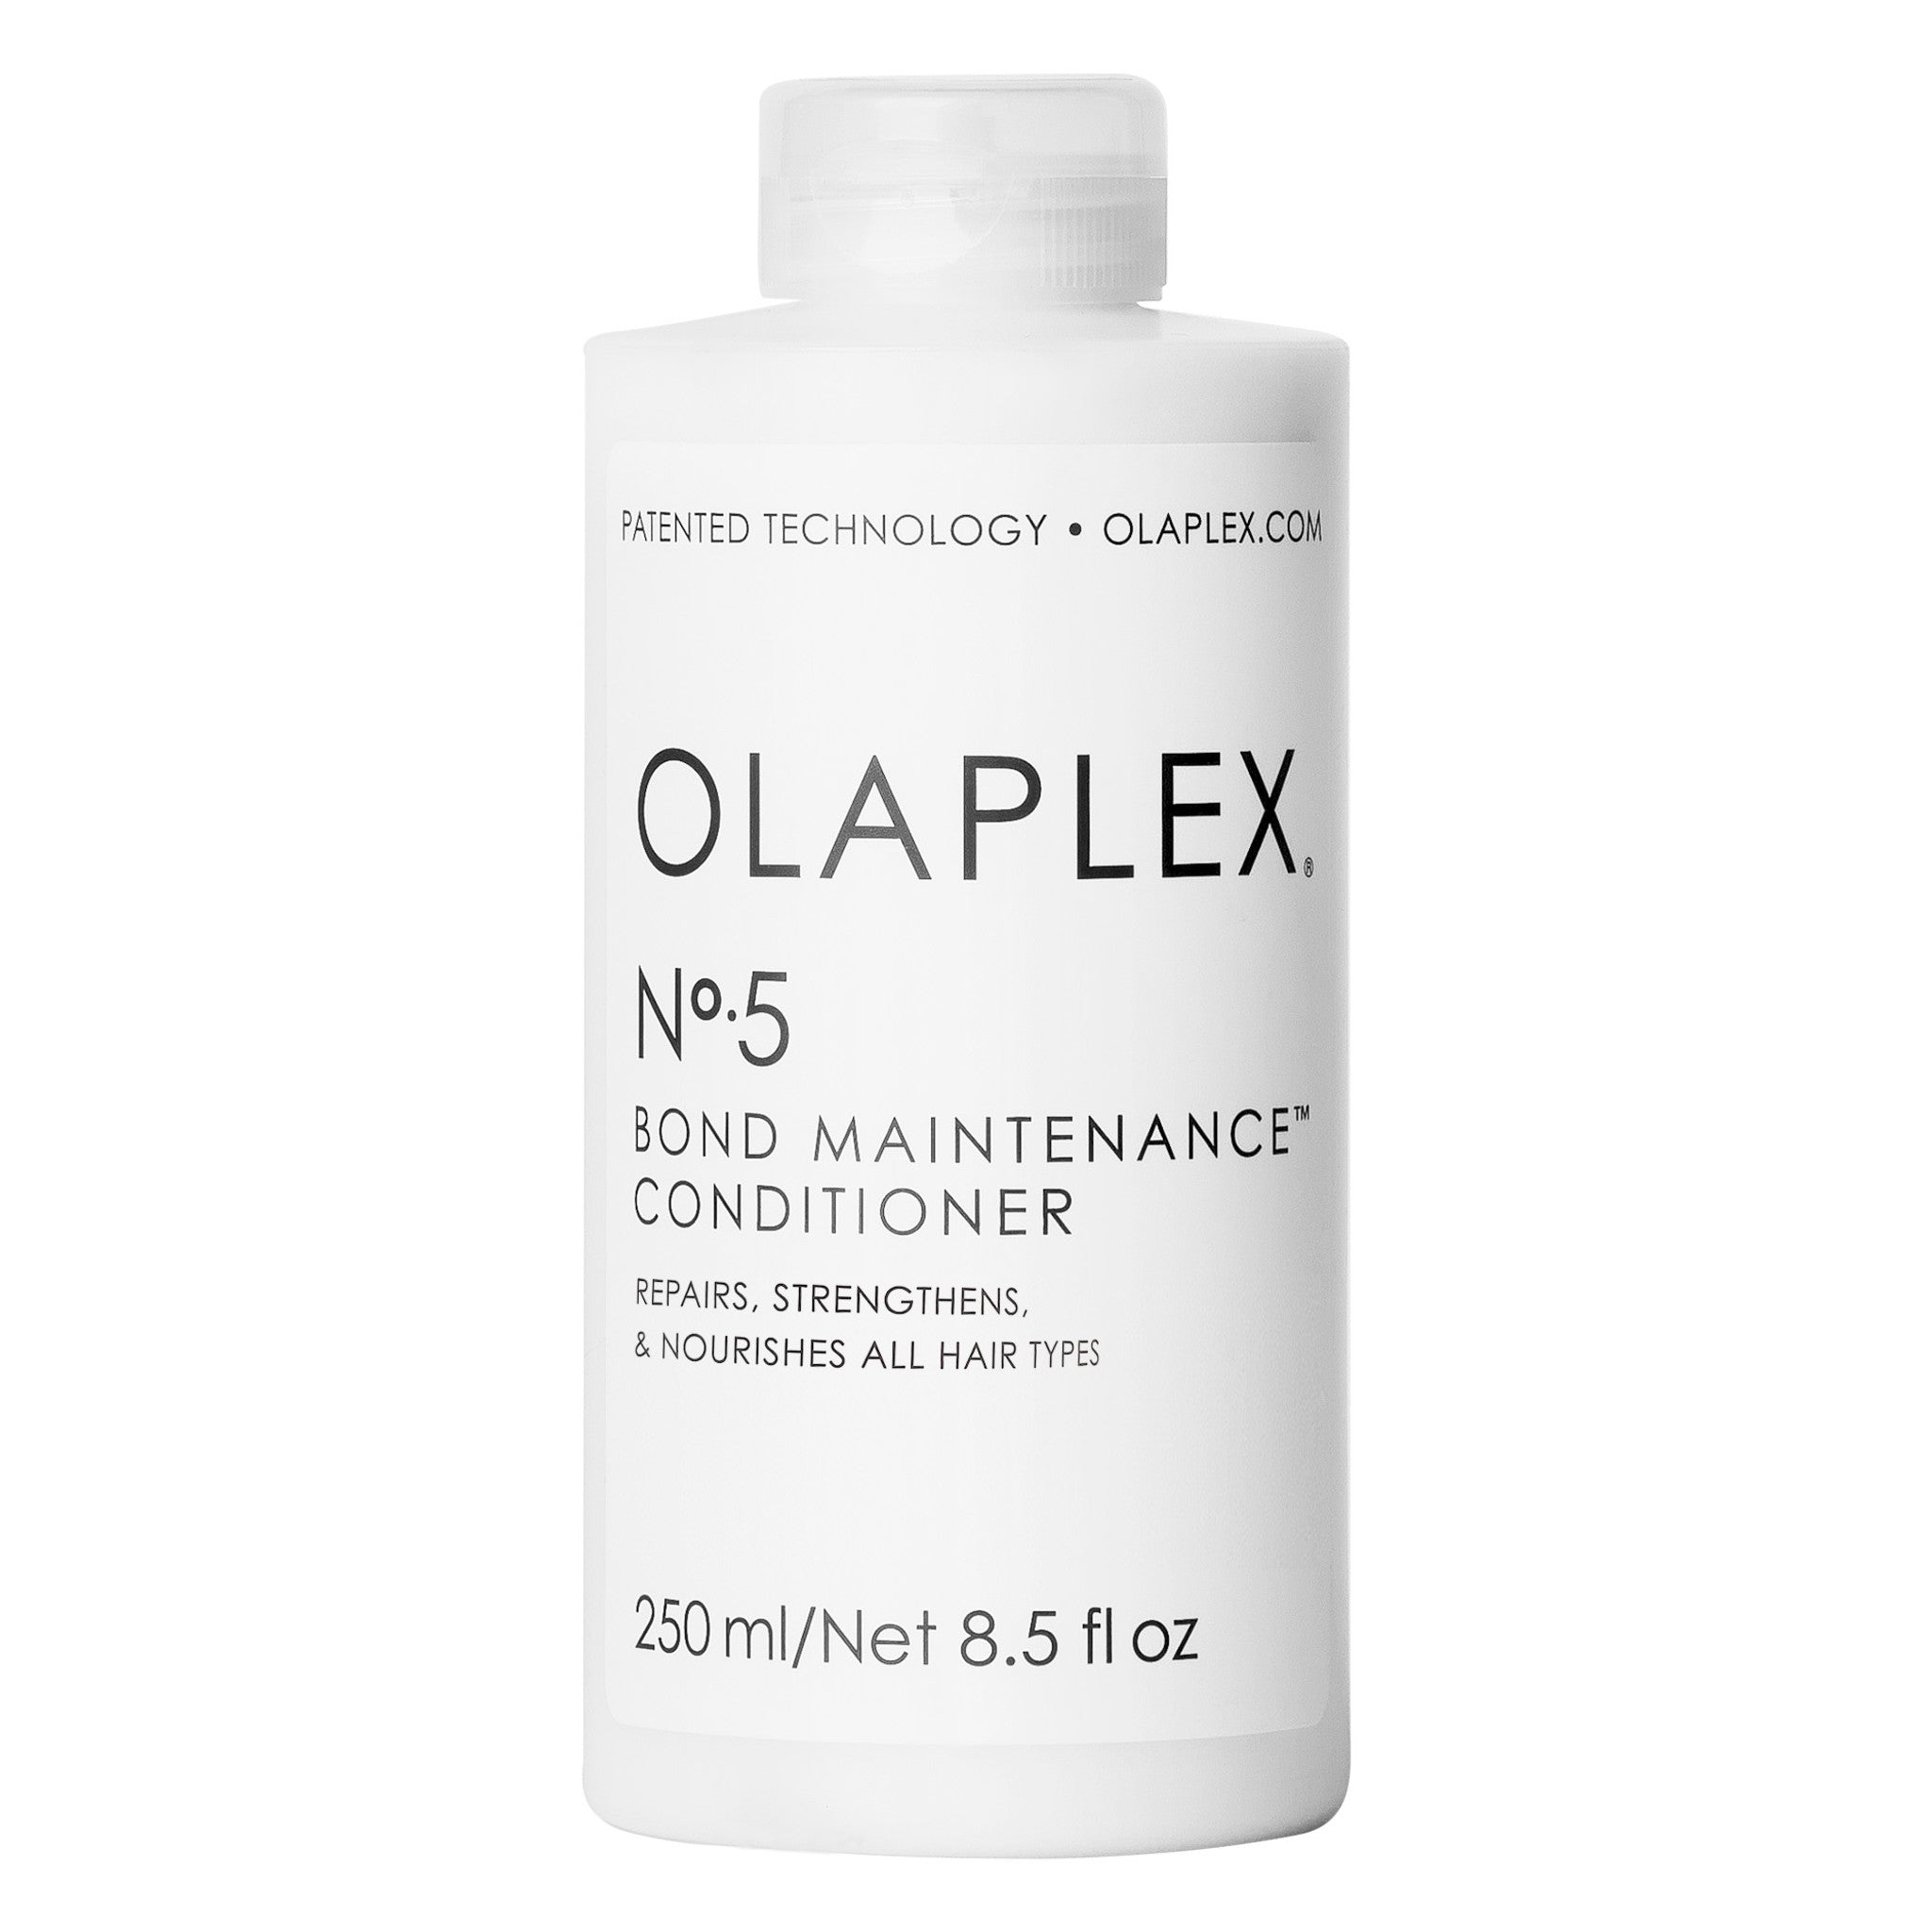 Olaplex No.5 Bond Maintenance Conditioner Size variant: 8.5 fl oz | 250 ml main image. This product is for black hair